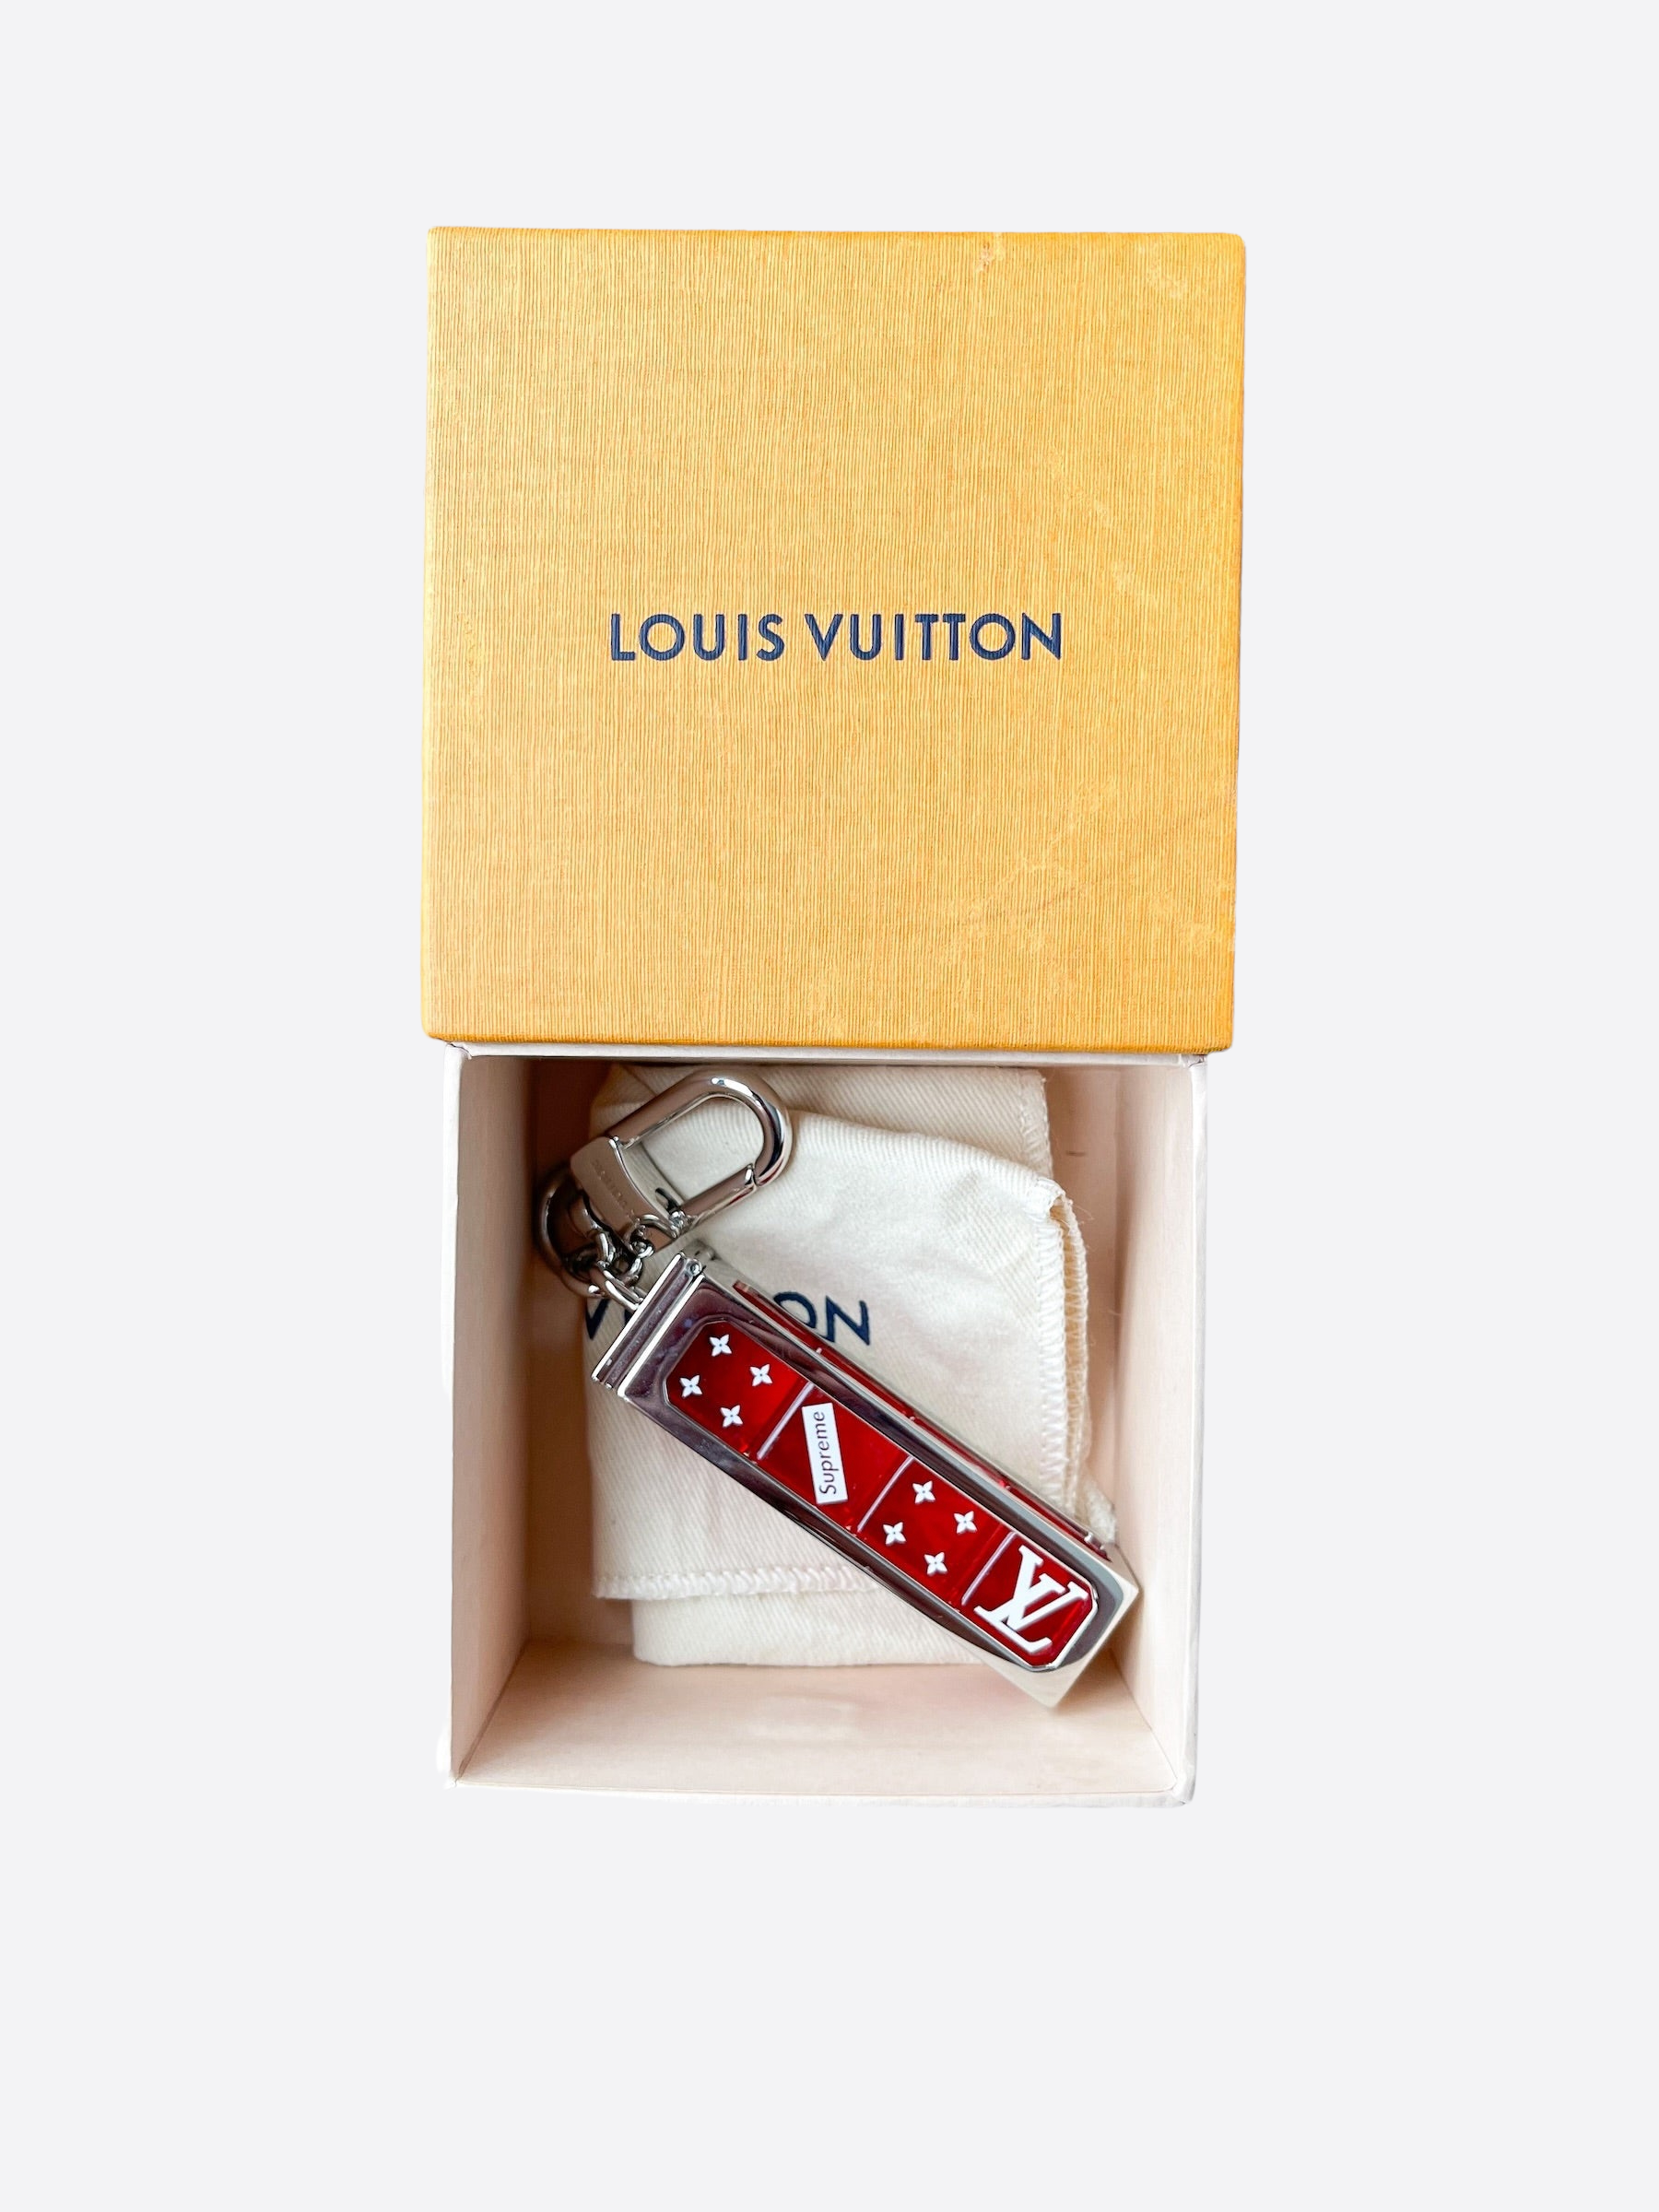 Louis Vuitton Supreme Dice Key Chain